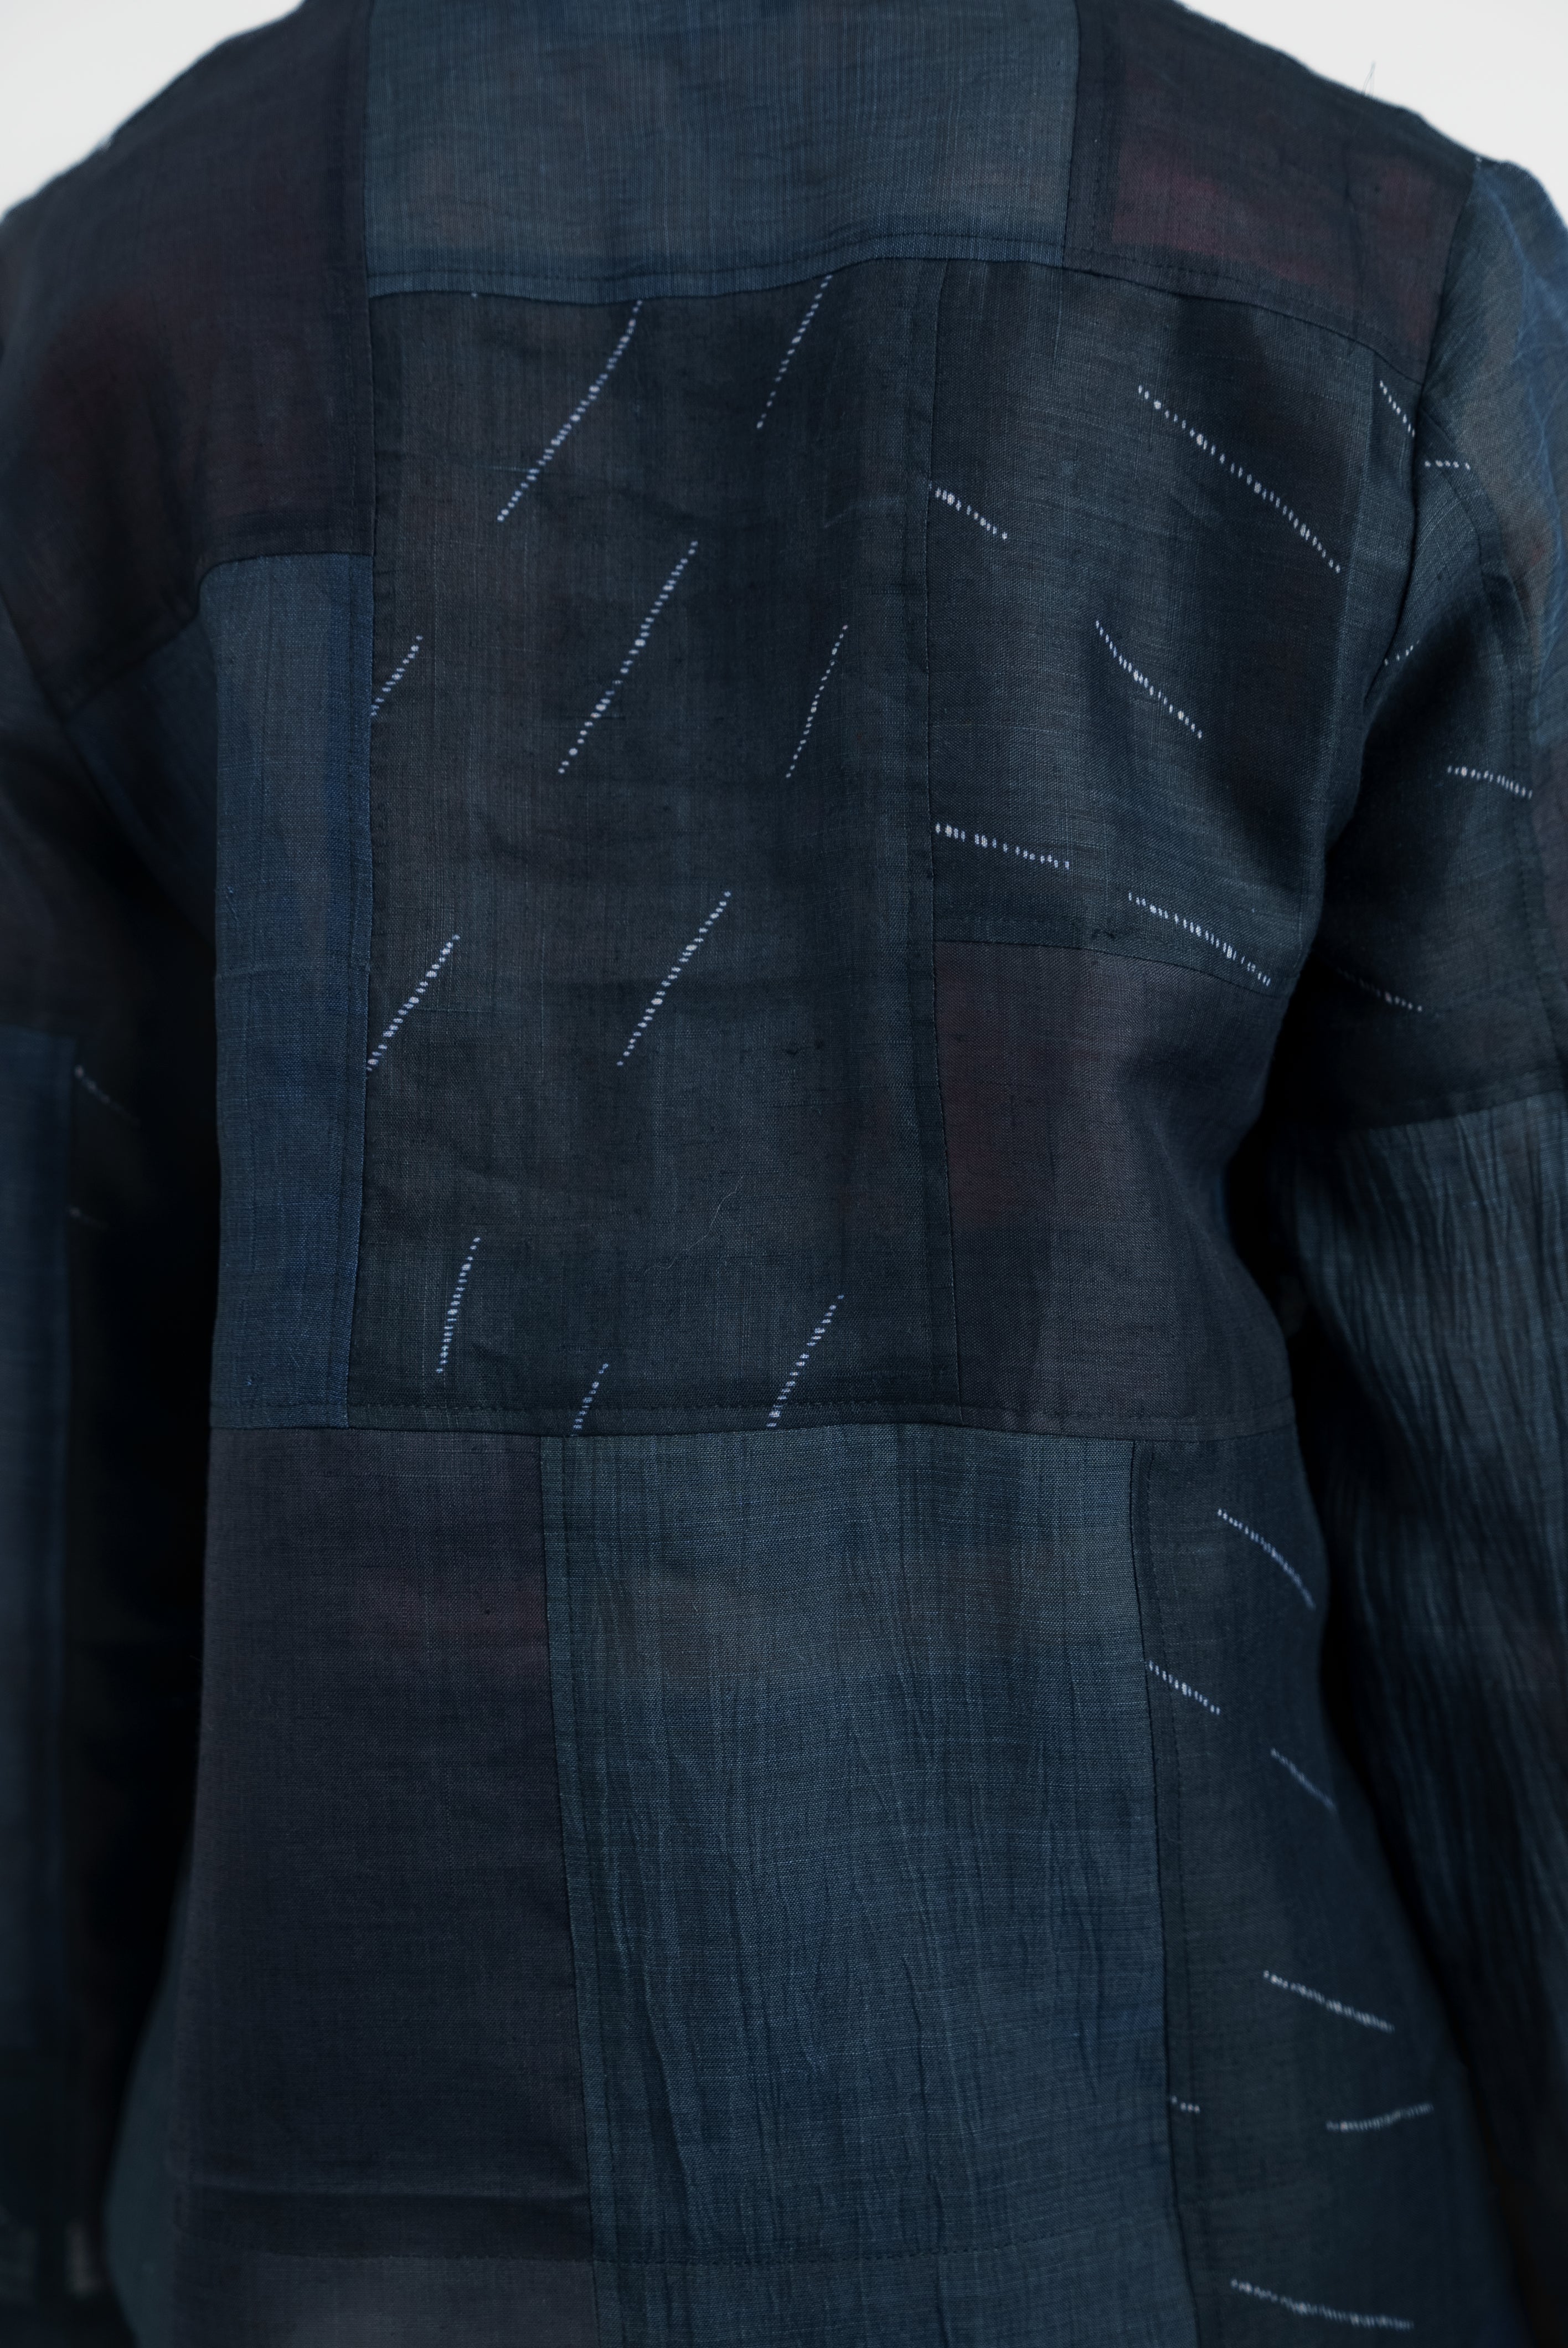 Kendo Jacket in Vintage Japanese Dark Blue Linen Mix